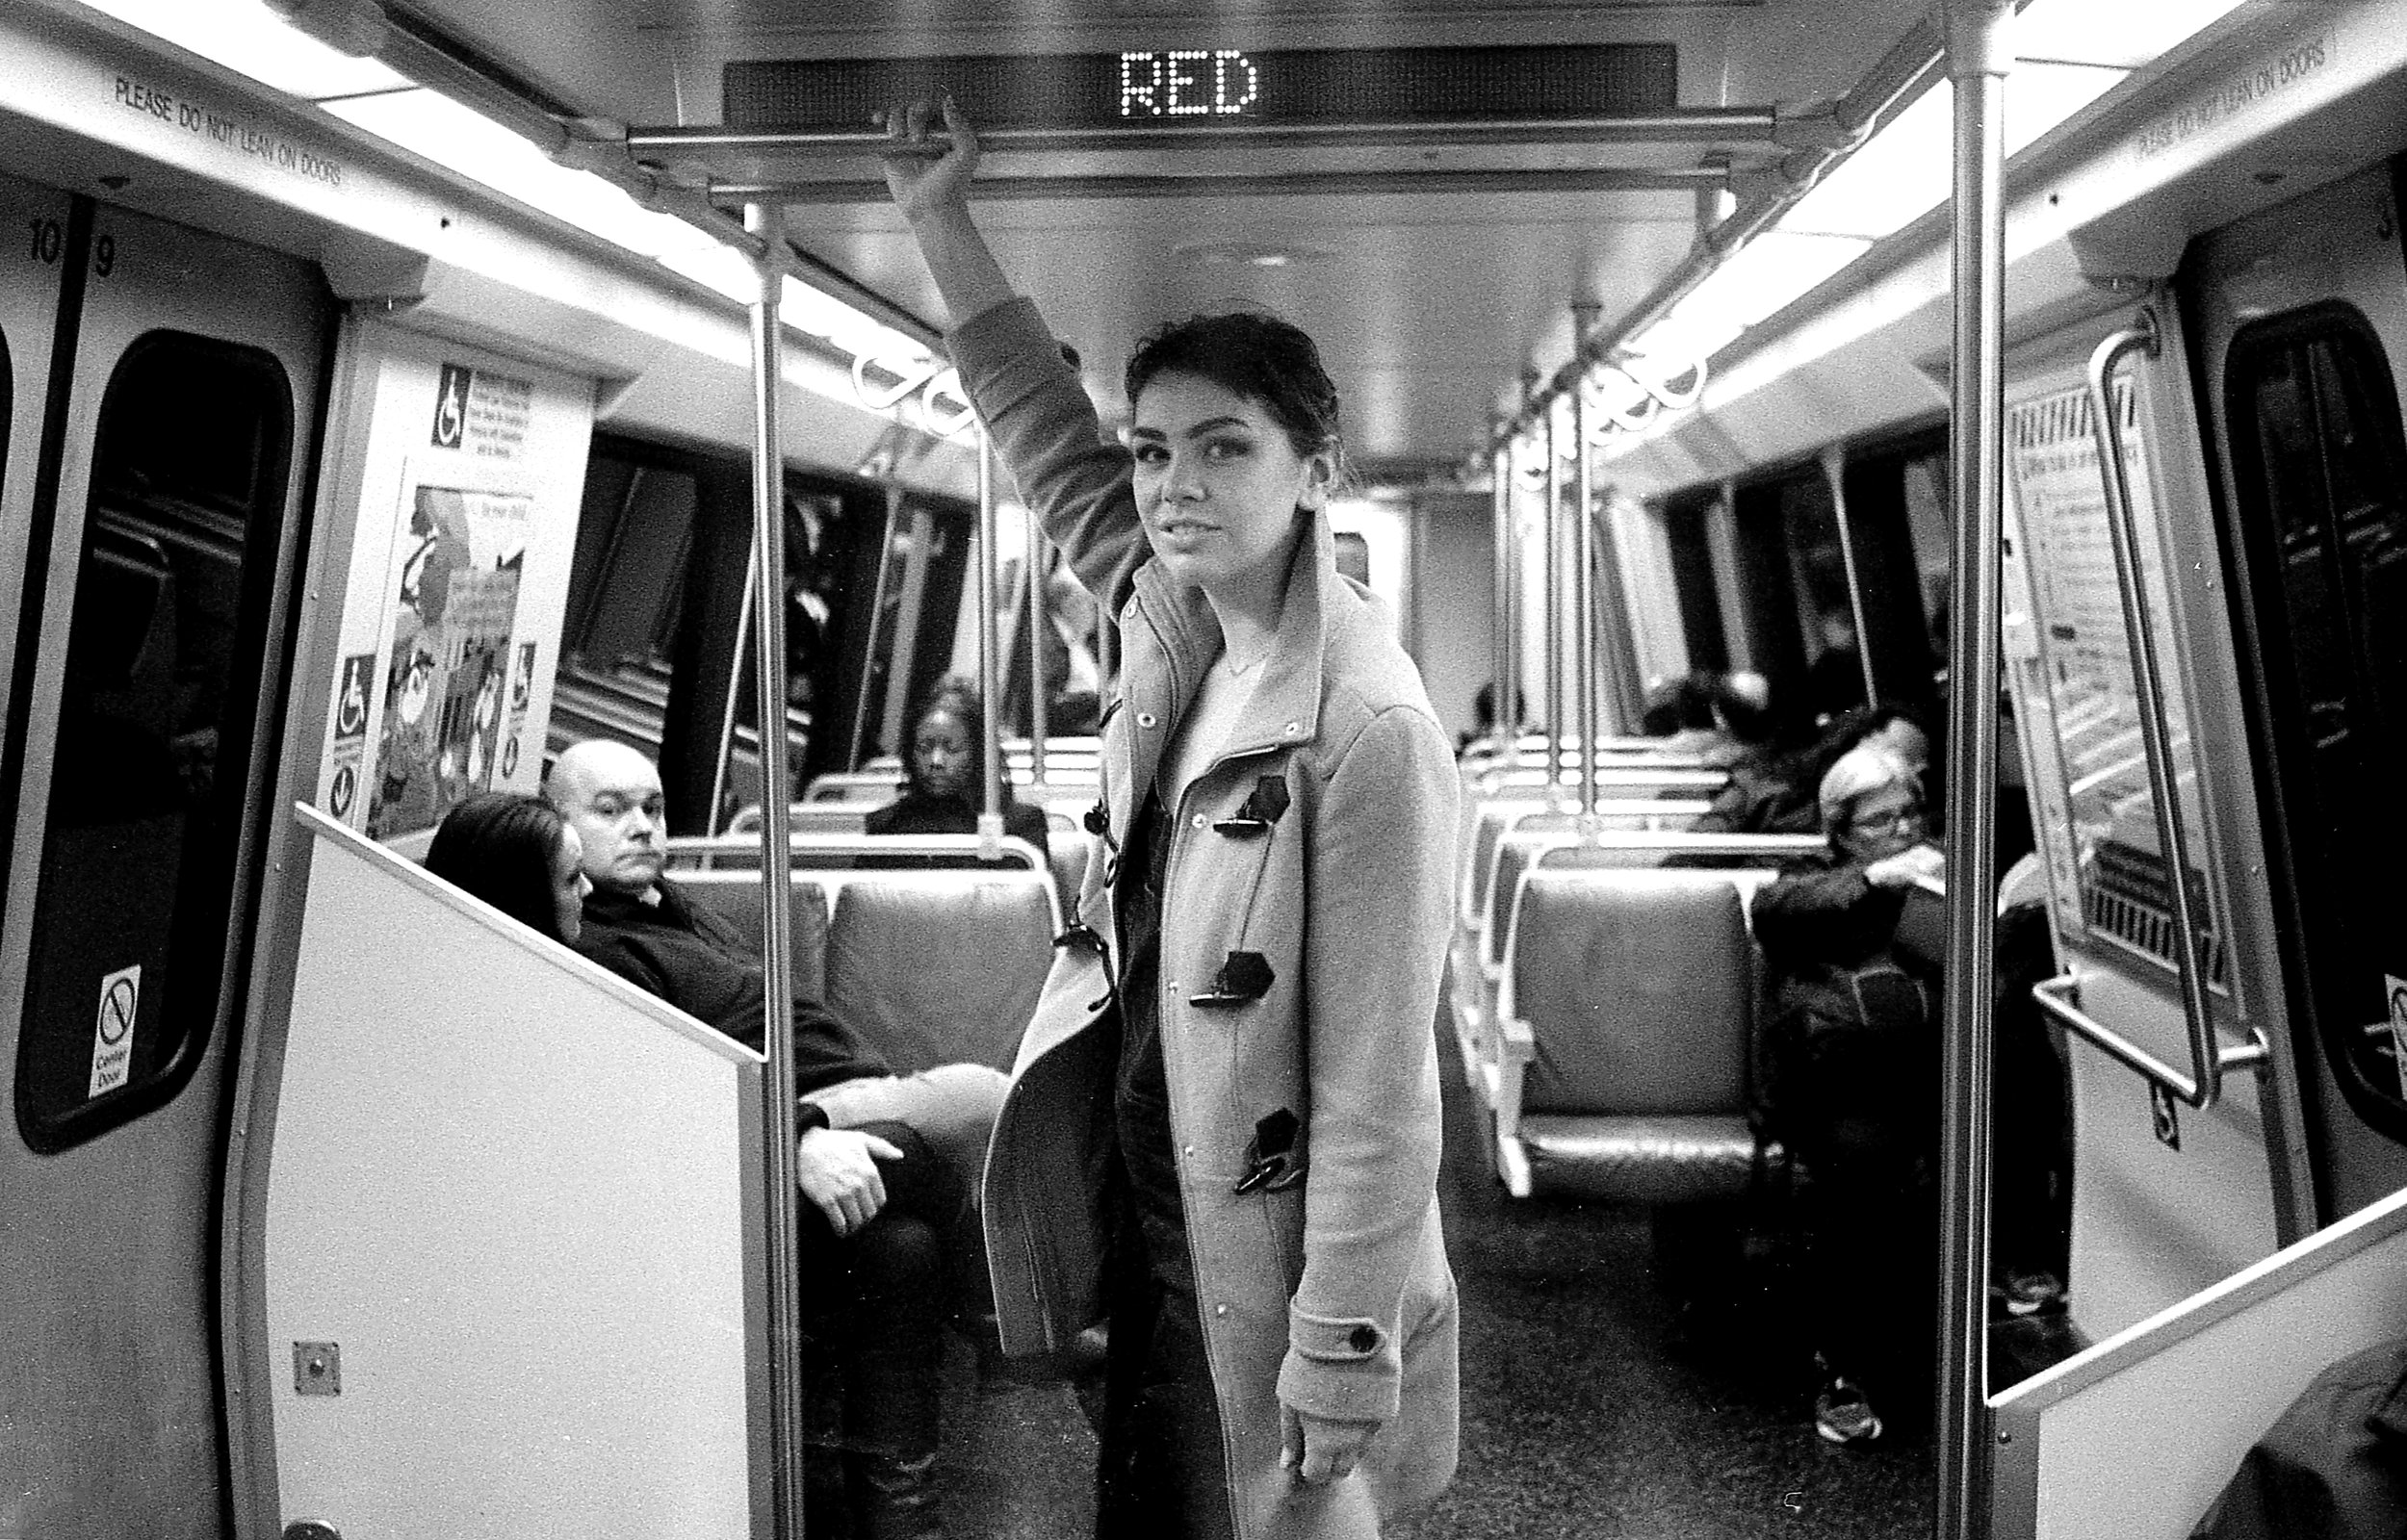  Emma rides the Metrorail in Washington, D.C. 